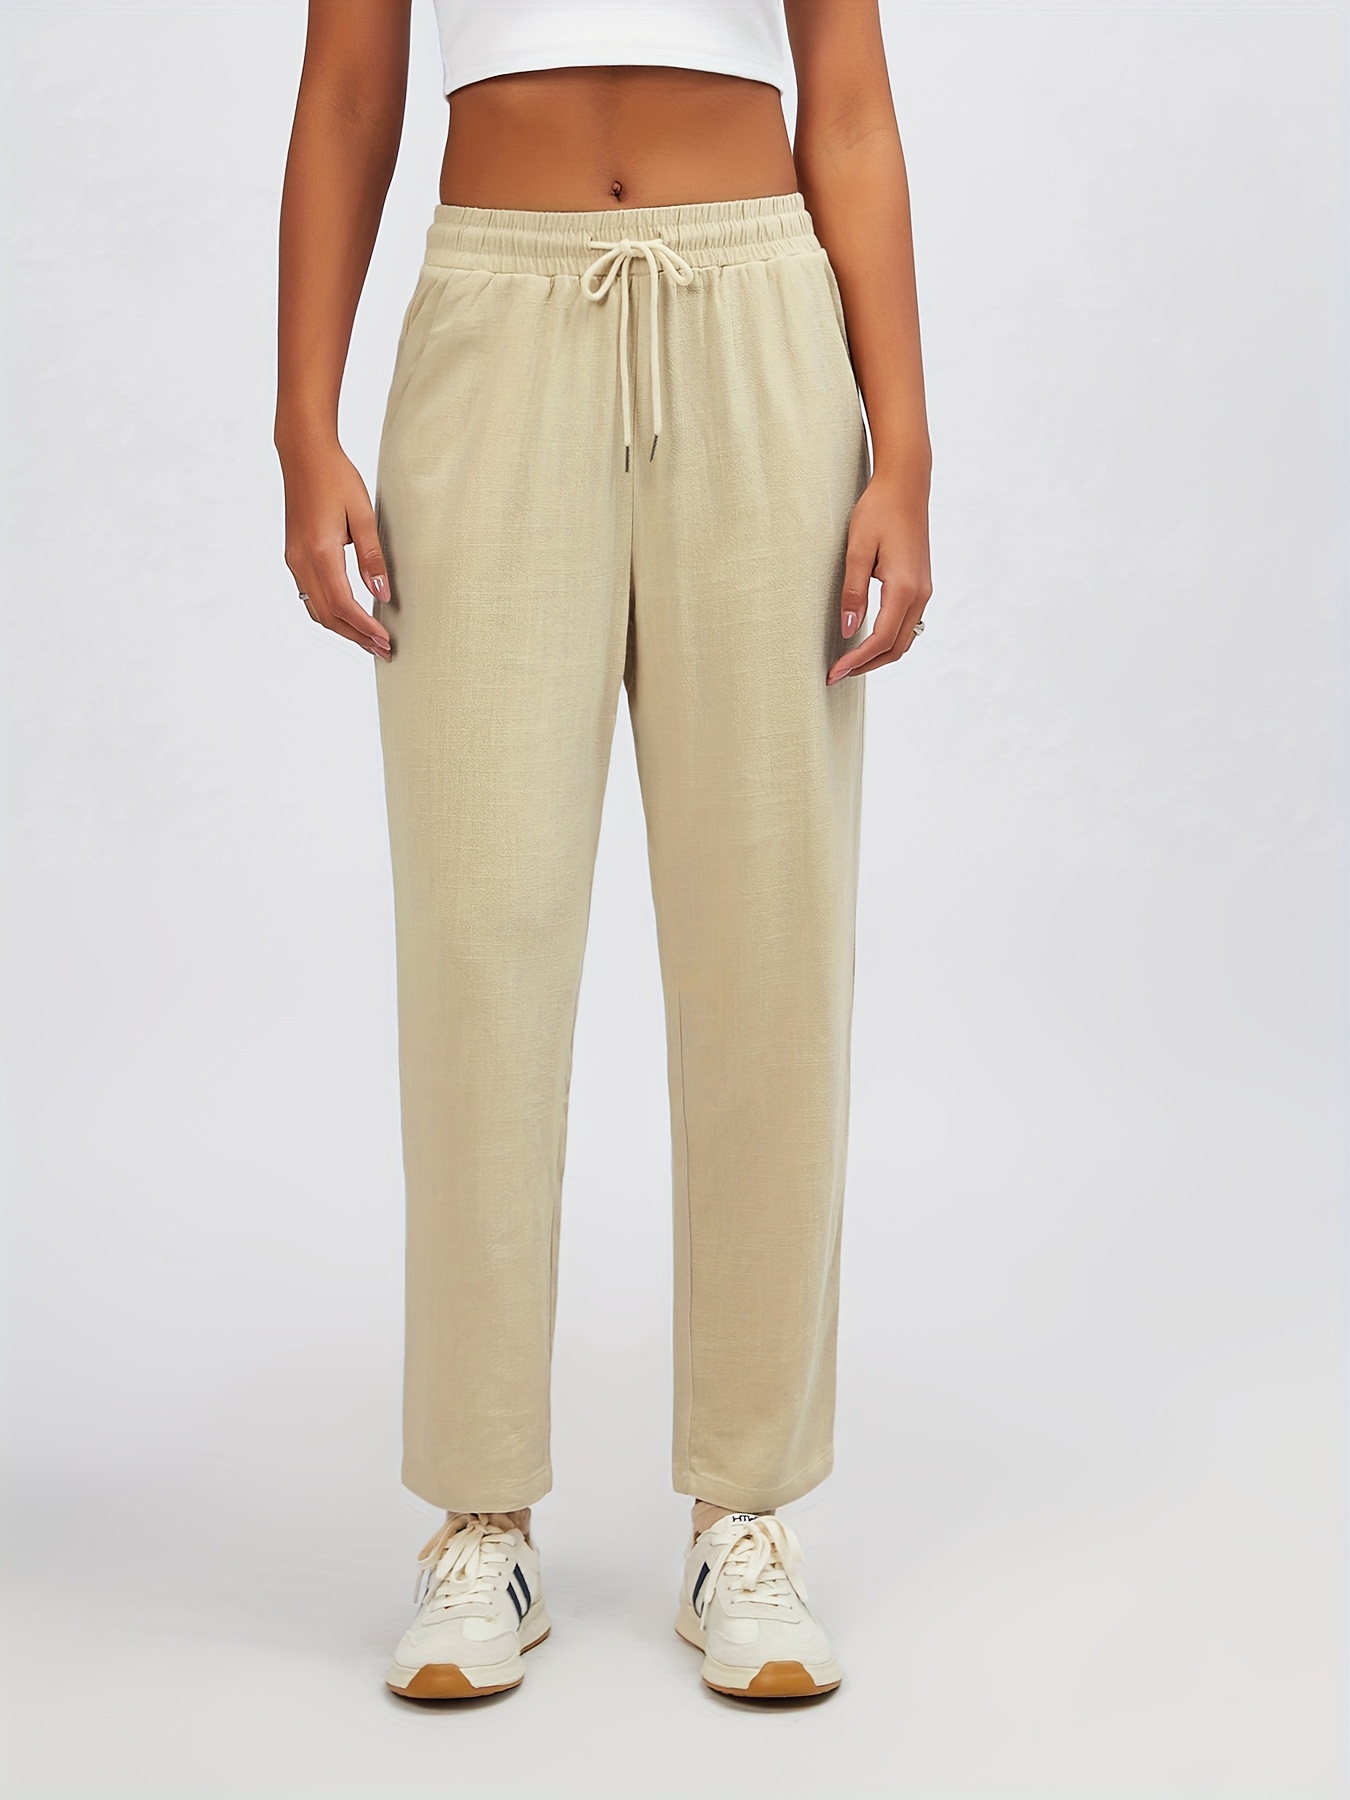 Pantalones Capri Mujer Bolsillos Cintura elástica sólidos Pierna ancha  Algodón Lino Pantalones sueltos Pantalón